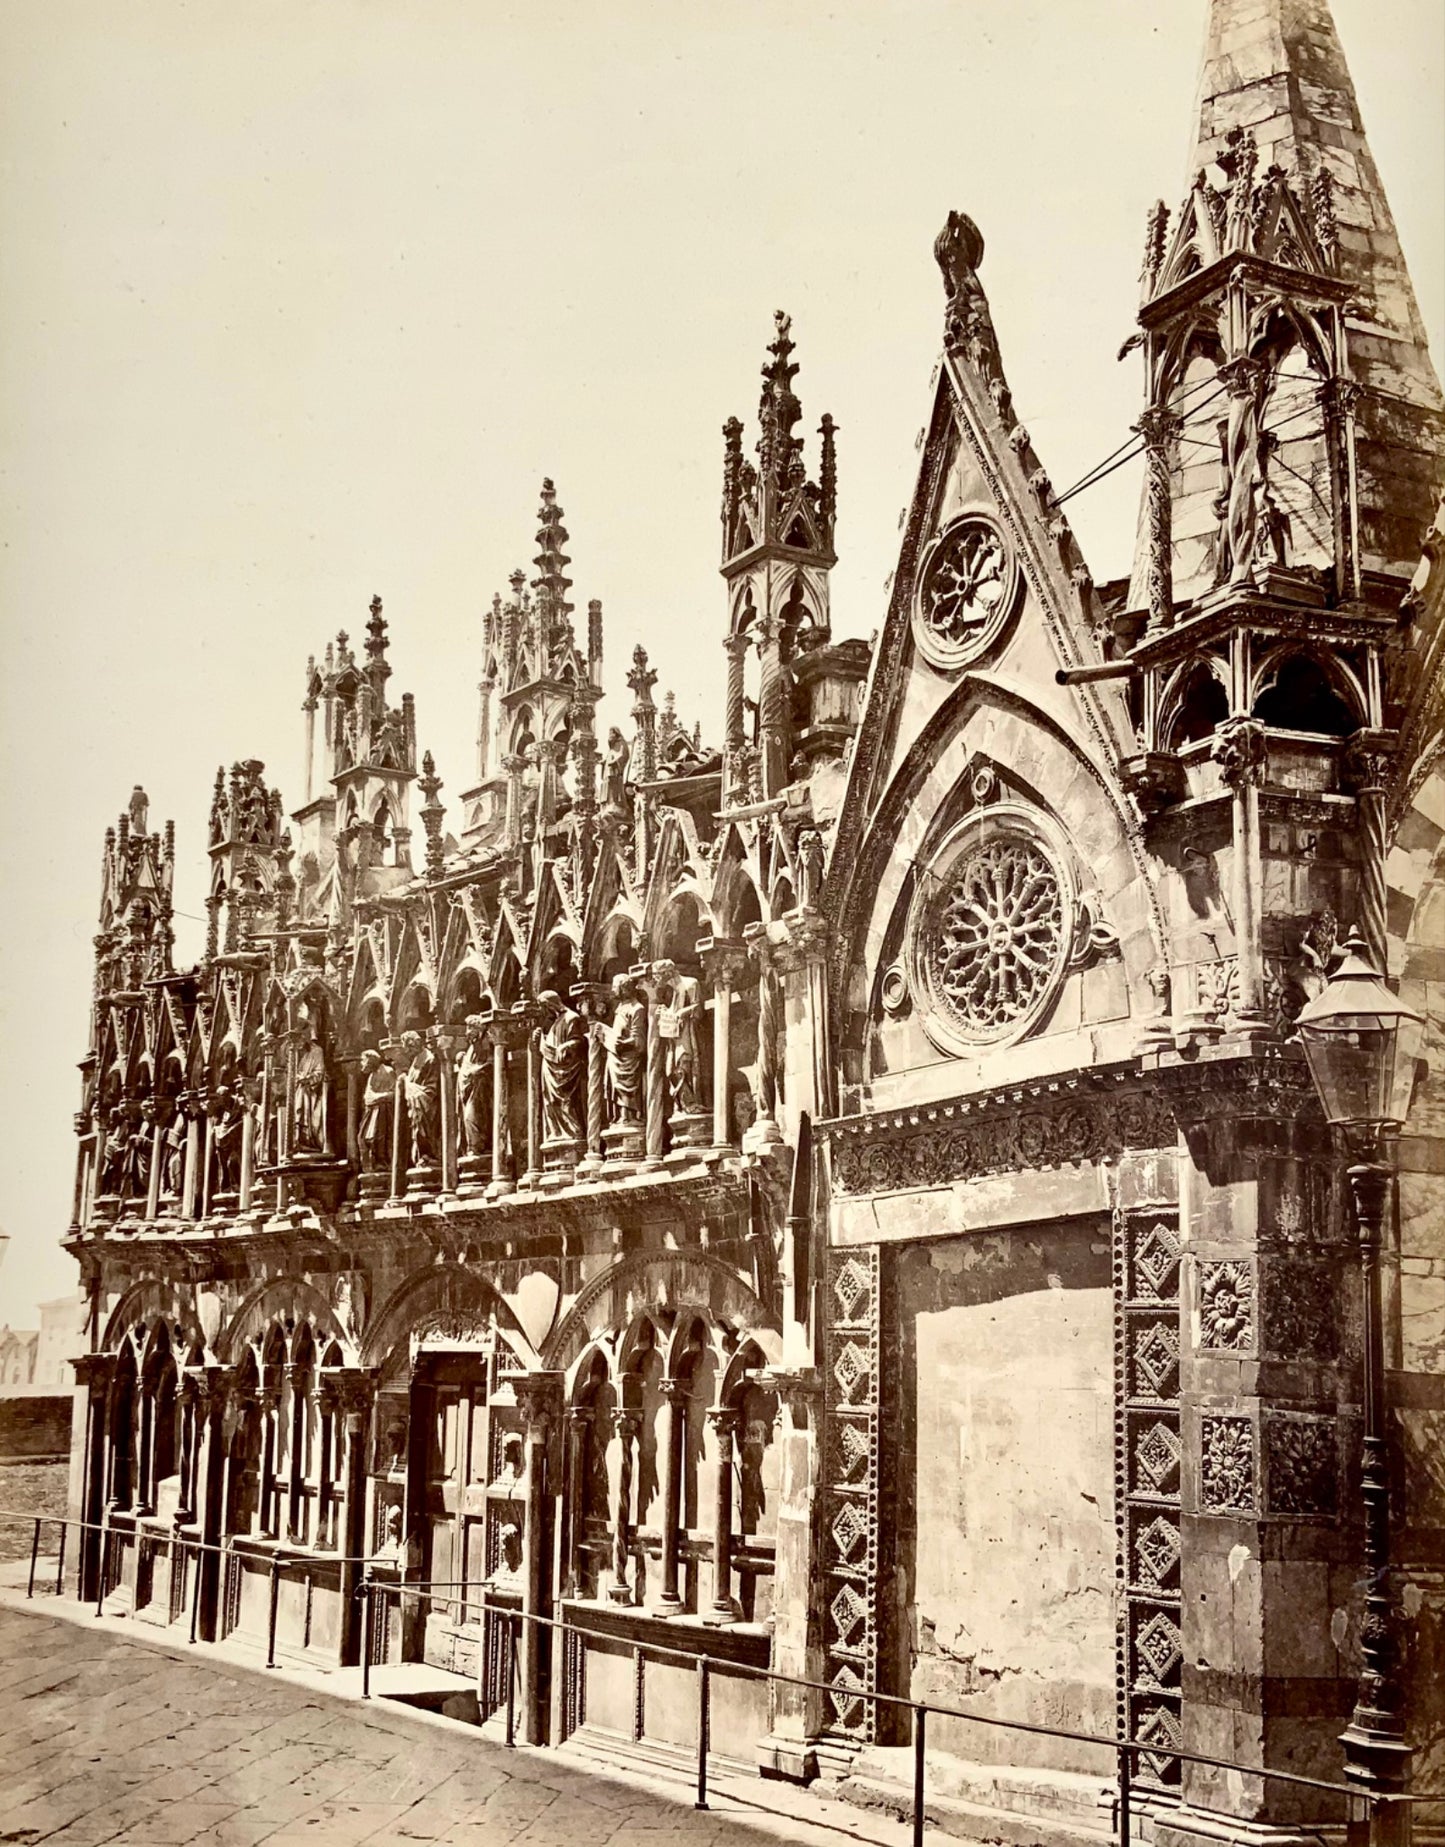 1870s Giacomo Brogi, Pisa, S. Maria della Spina, albumen print